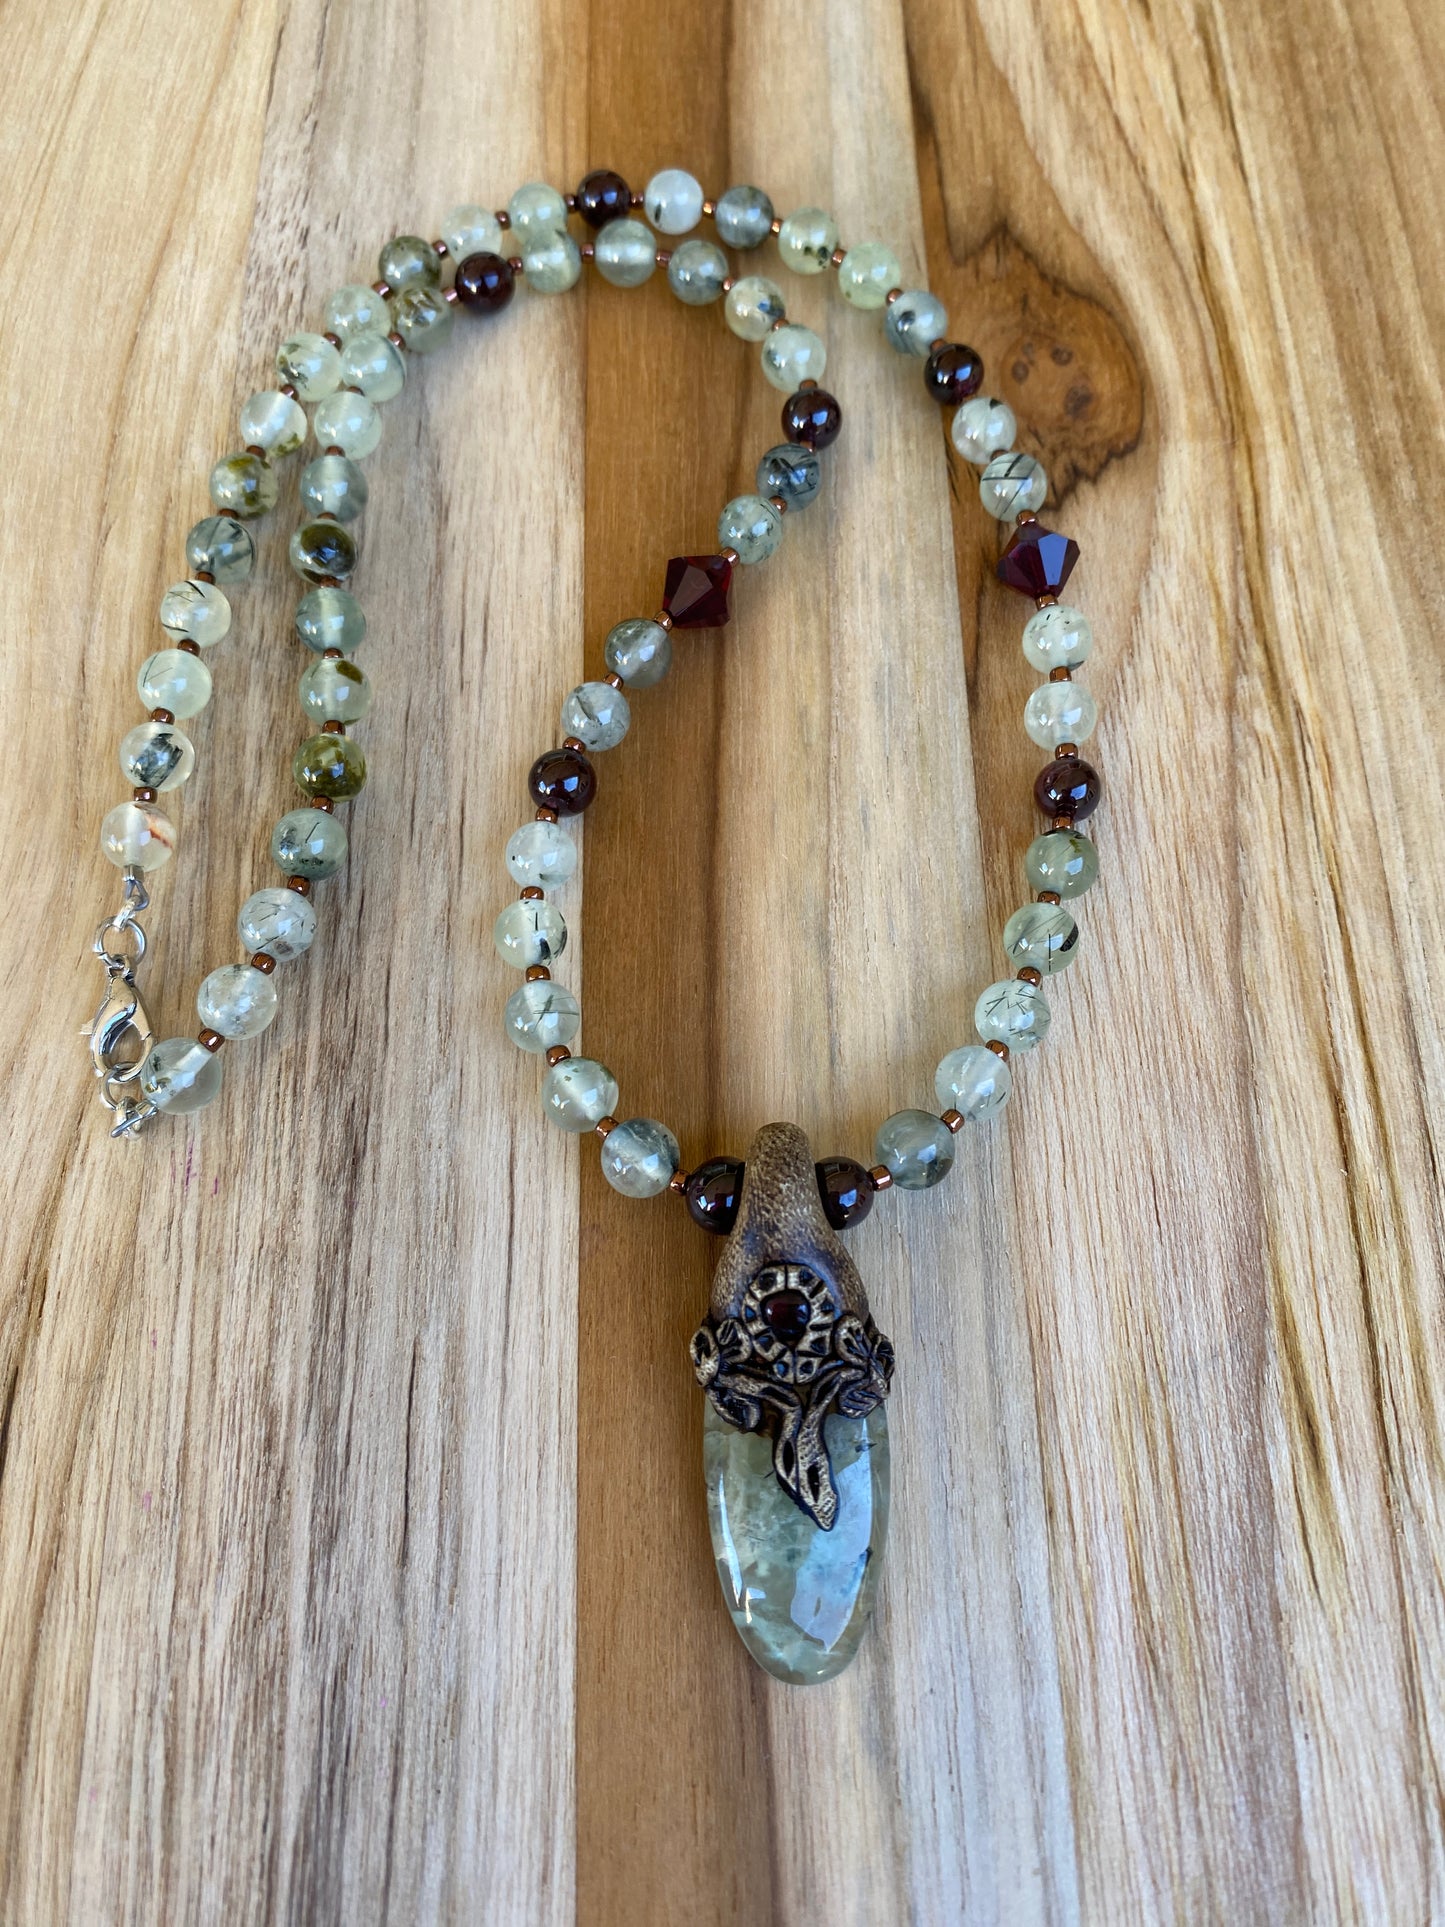 Prehnite Pendant Necklace with Prehnite and Garnet Beads